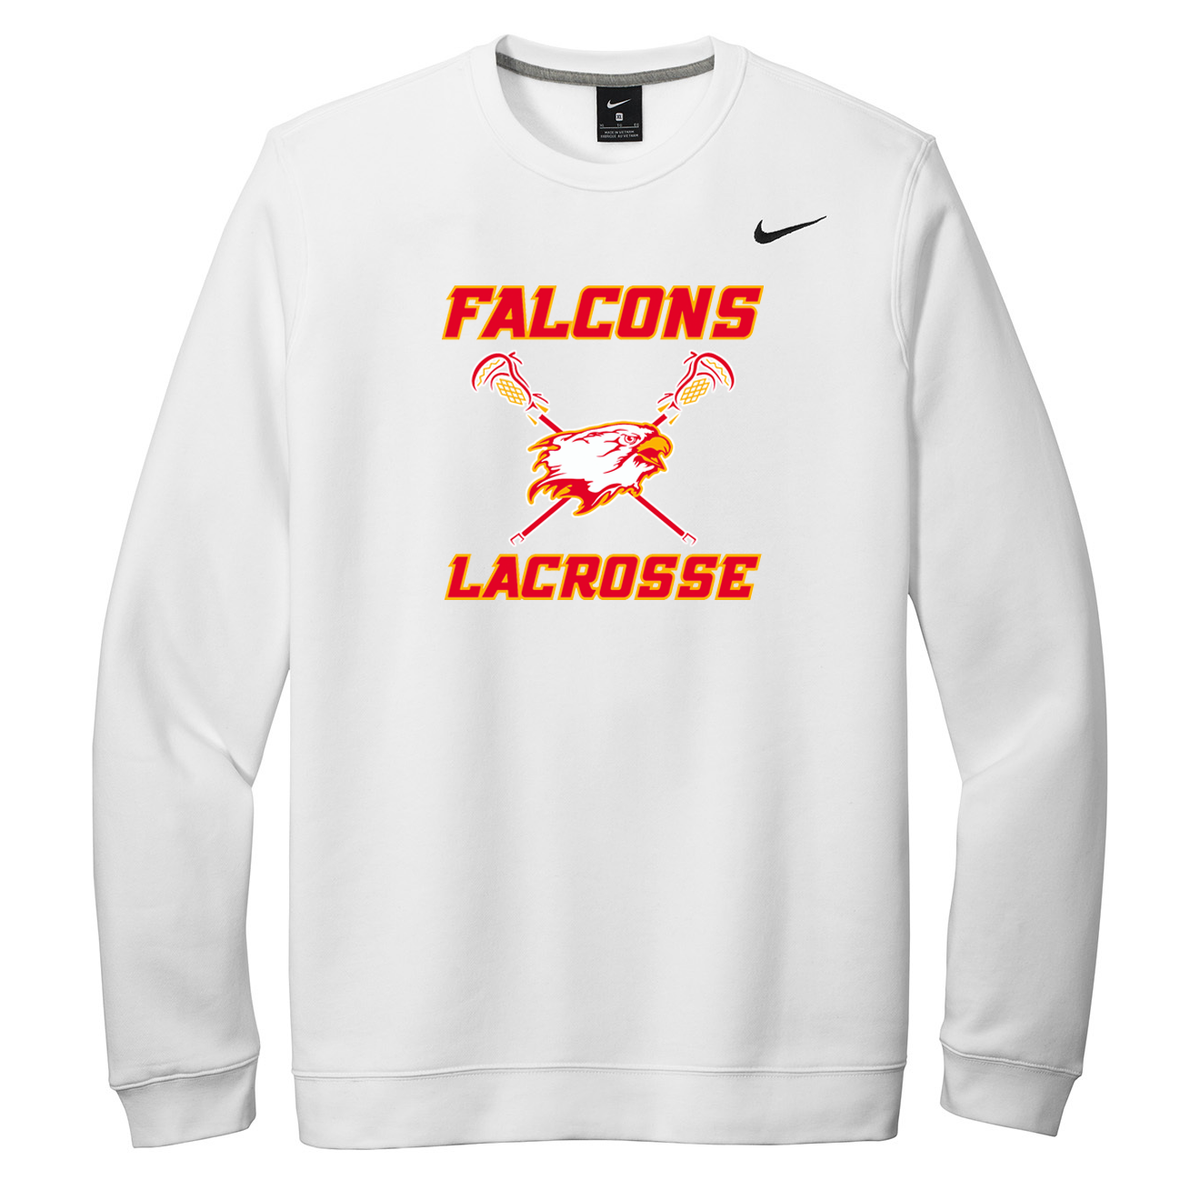 Falcons Lacrosse Club Nike Fleece Crew Neck